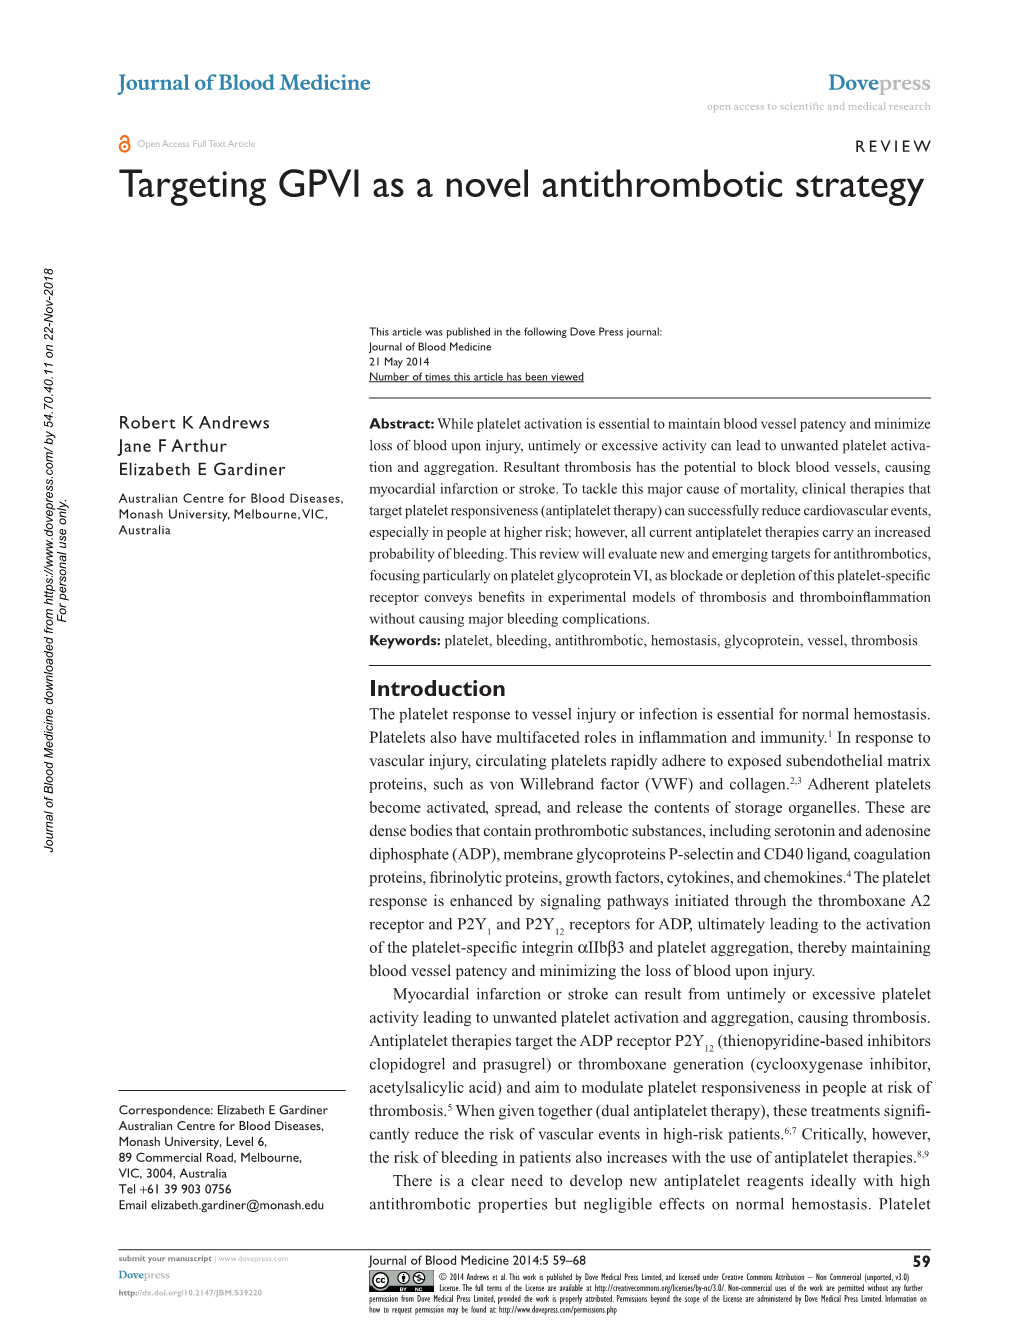 Targeting GPVI As a Novel Antithrombotic Strategy